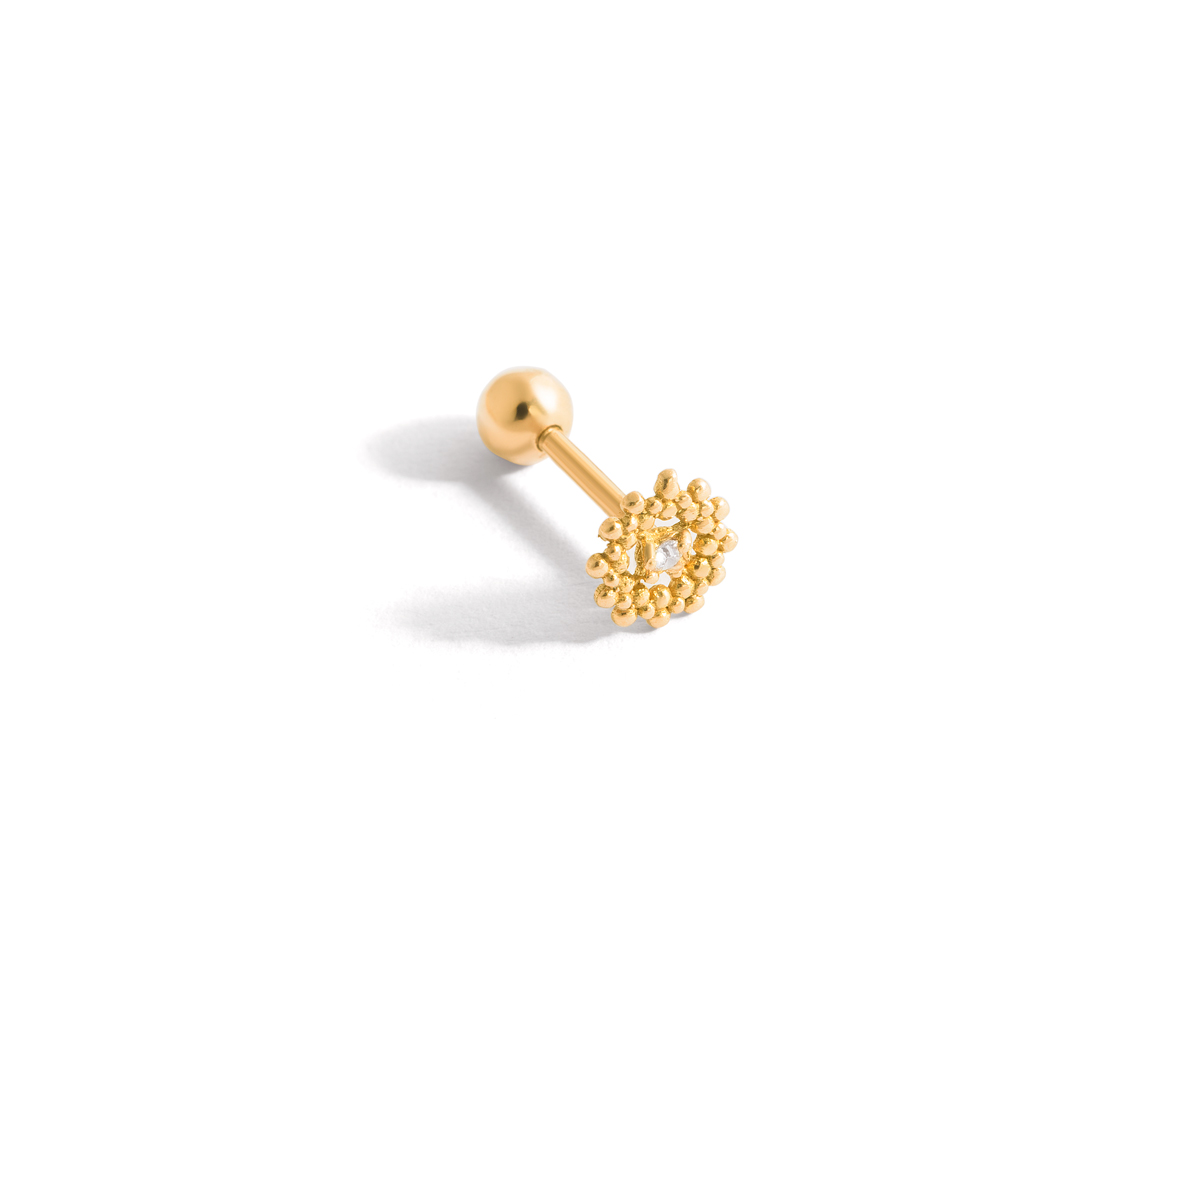 Single gem and ball gold piercing g